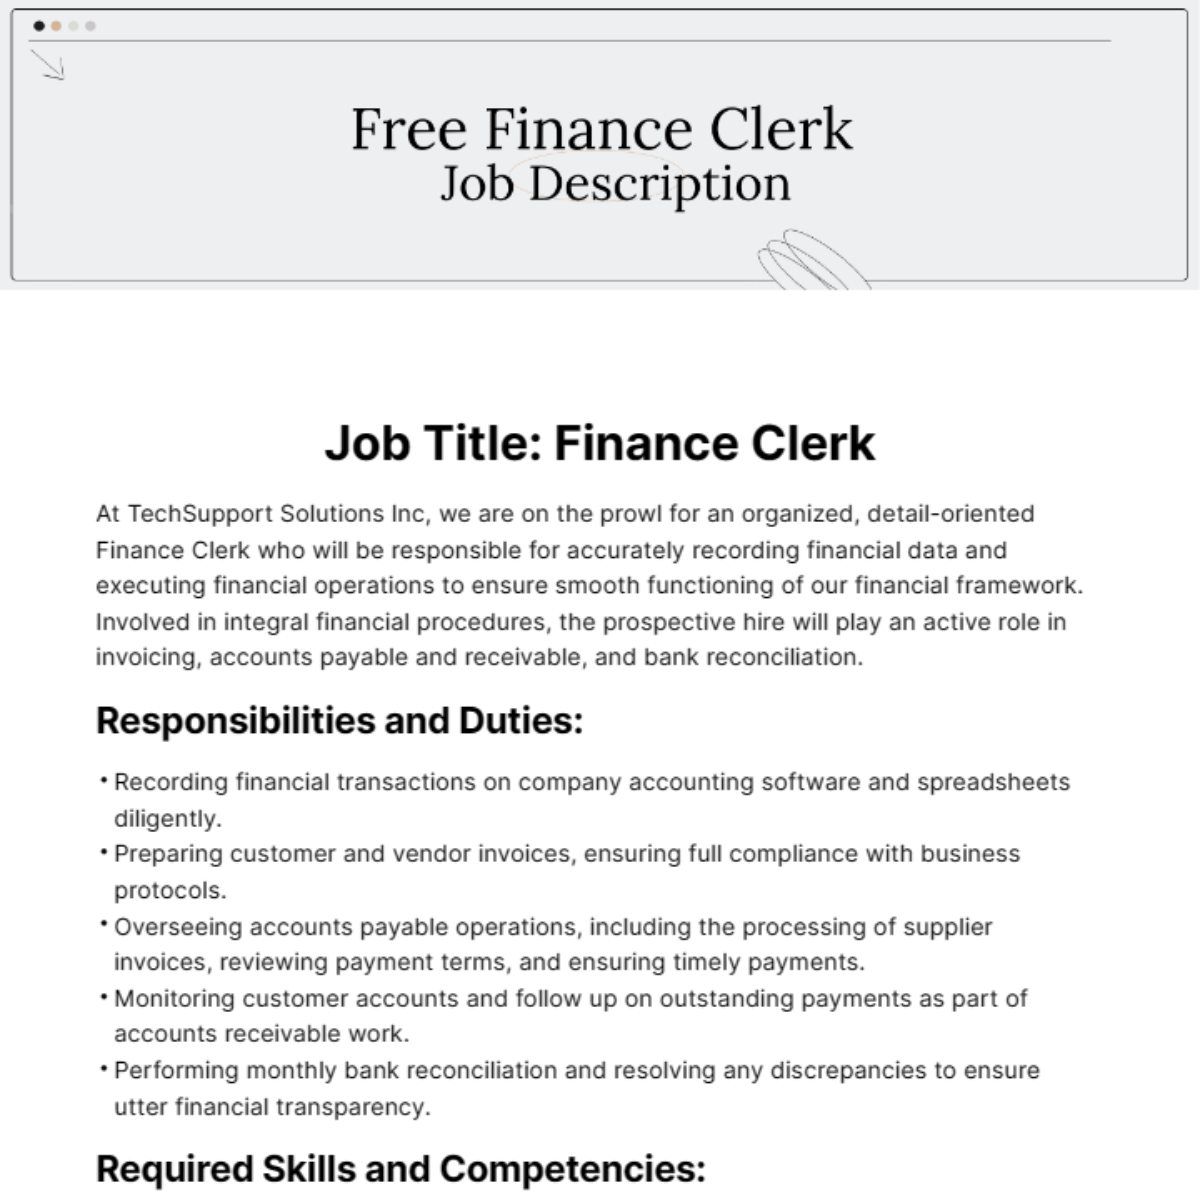 Free Finance Clerk Job Description Template